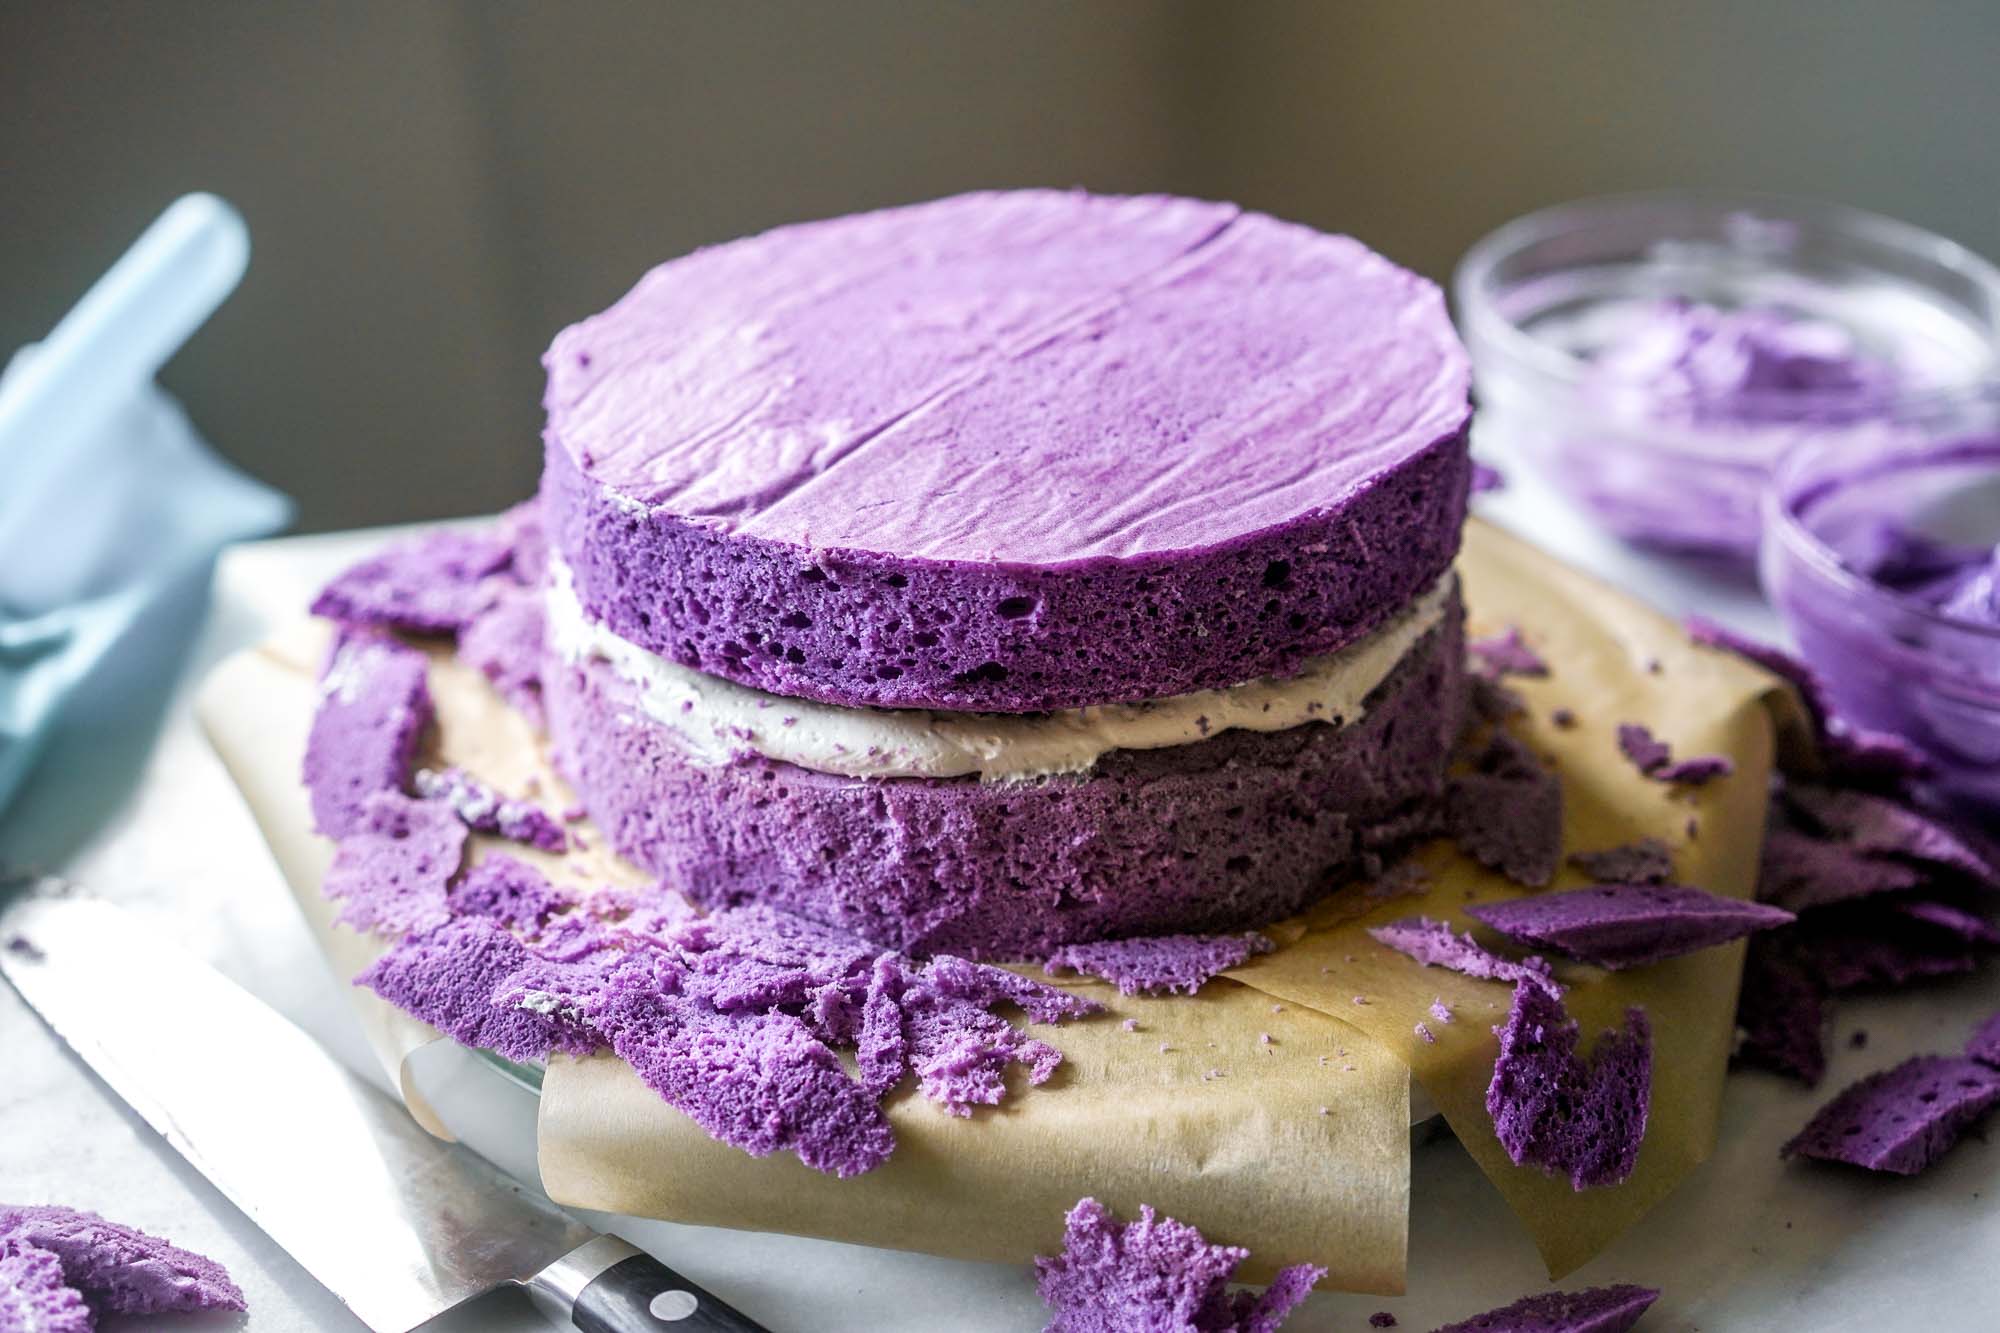 Shades of purple cake 🎂 Flavor : Coffee Cake #birthdaycake #coffeecake  #boulebatardcake | Instagram